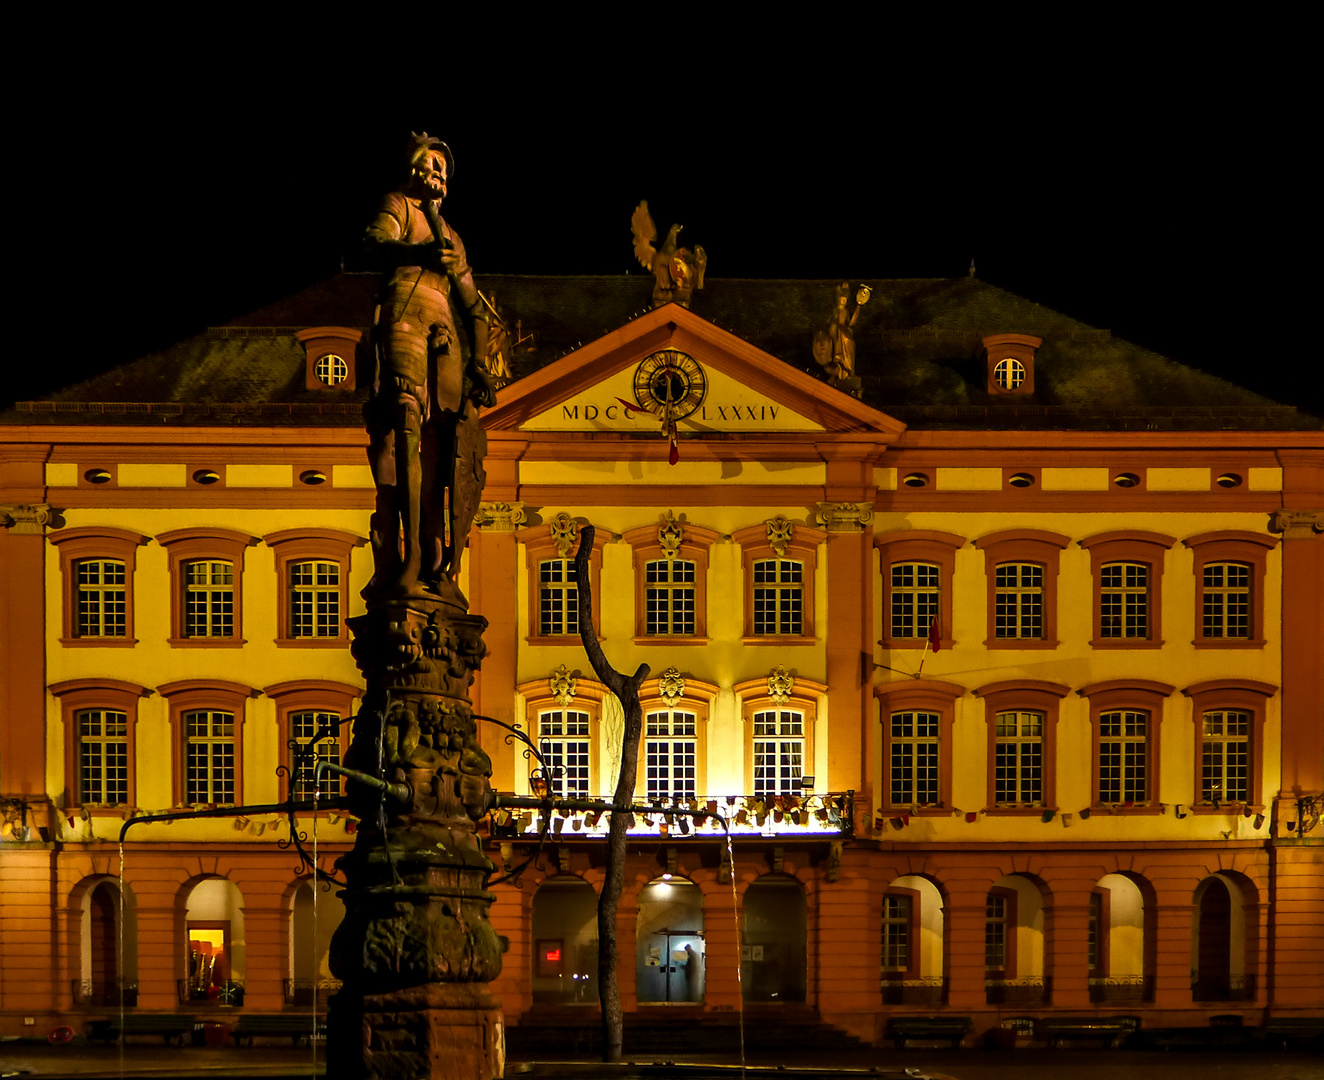 Rathaus in Gengenbach